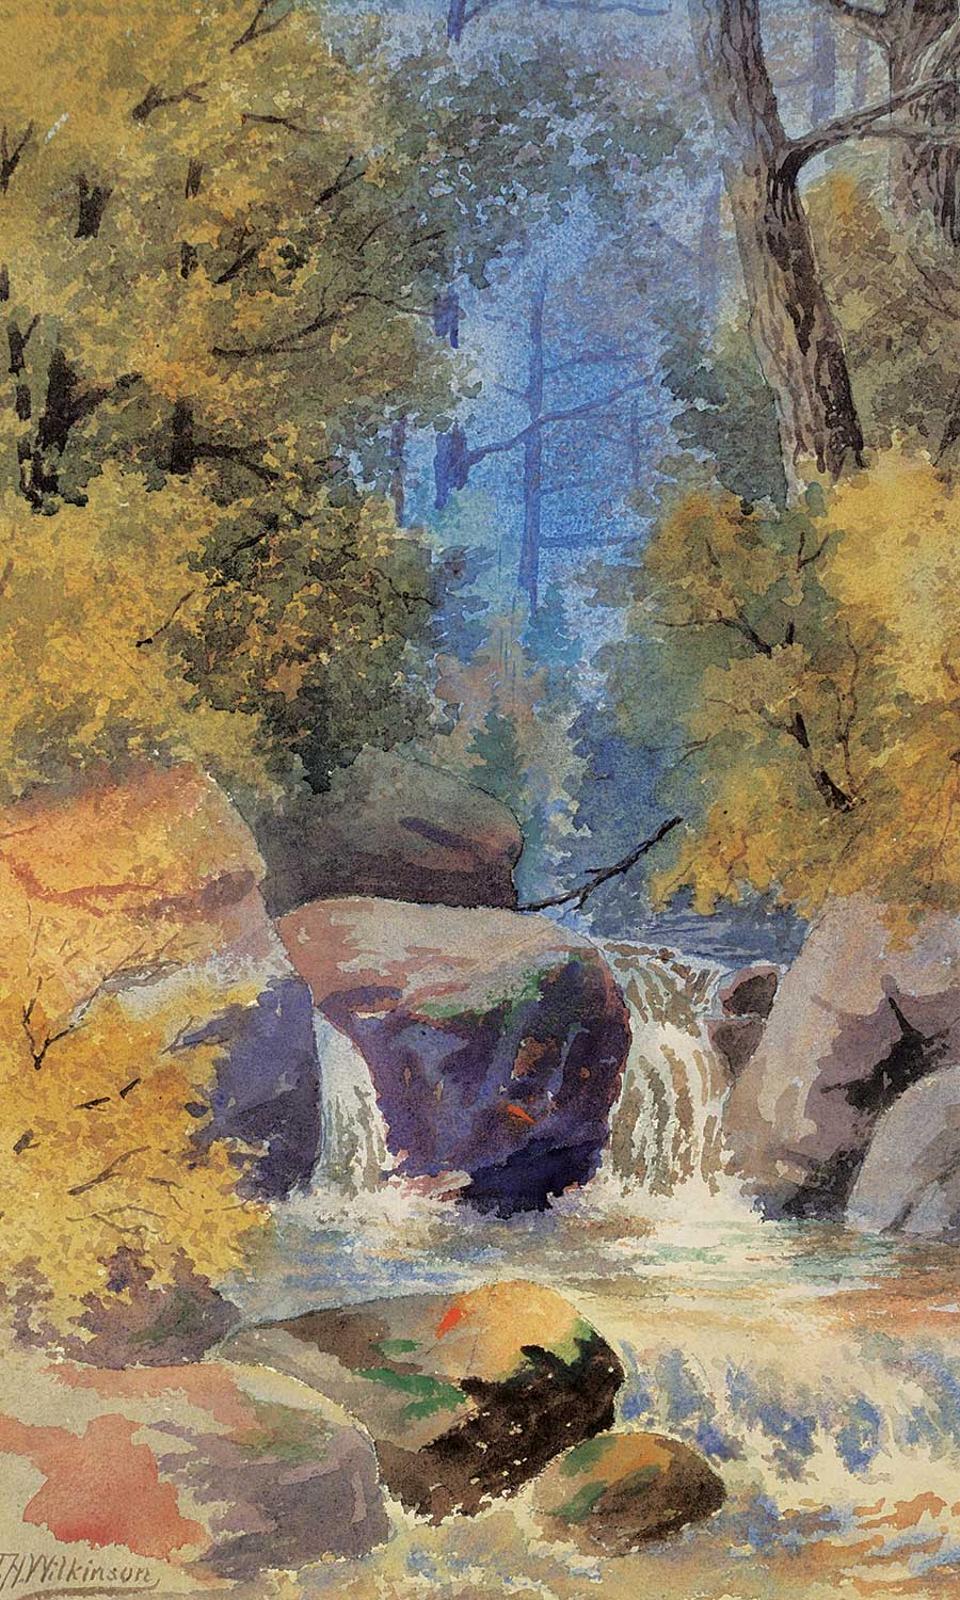 Thomas Harrison (T.H.) Wilkinson (1847-1929) - Stream in Forest